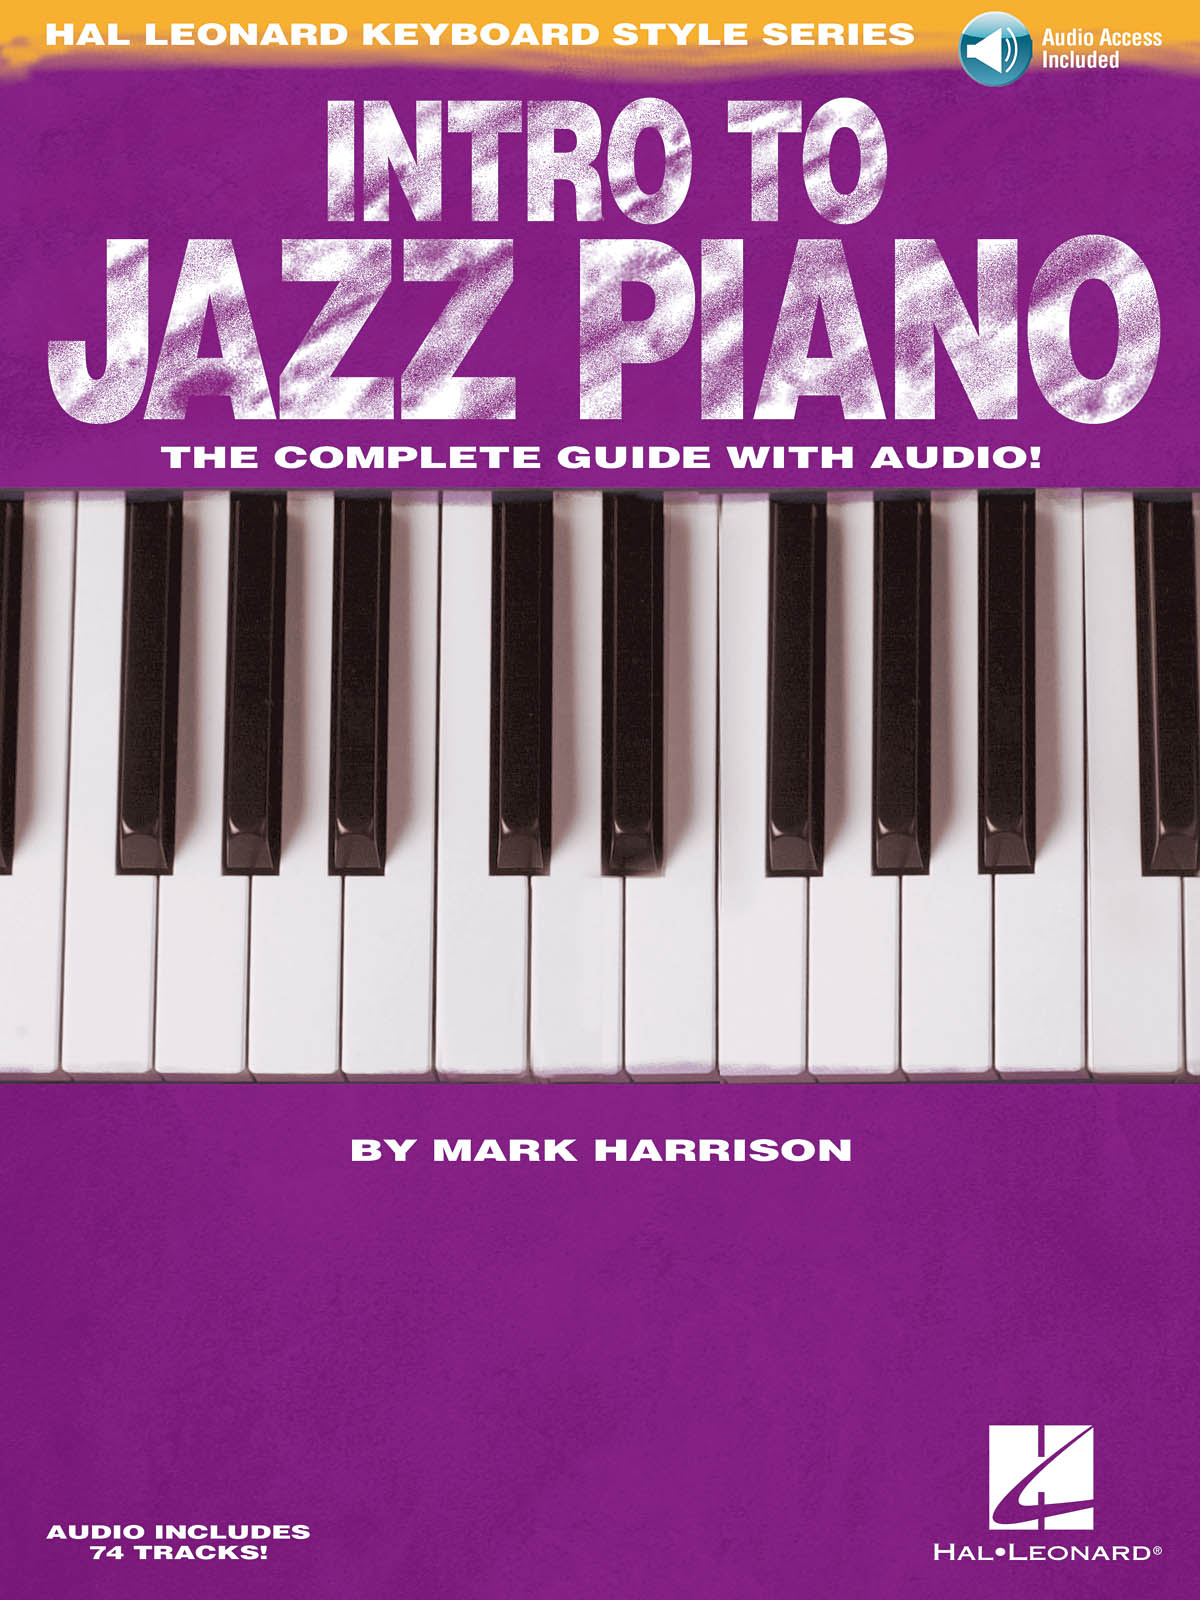 HAL LEONARD HARRISON MARK - INTRO TO JAZZ PIANO 